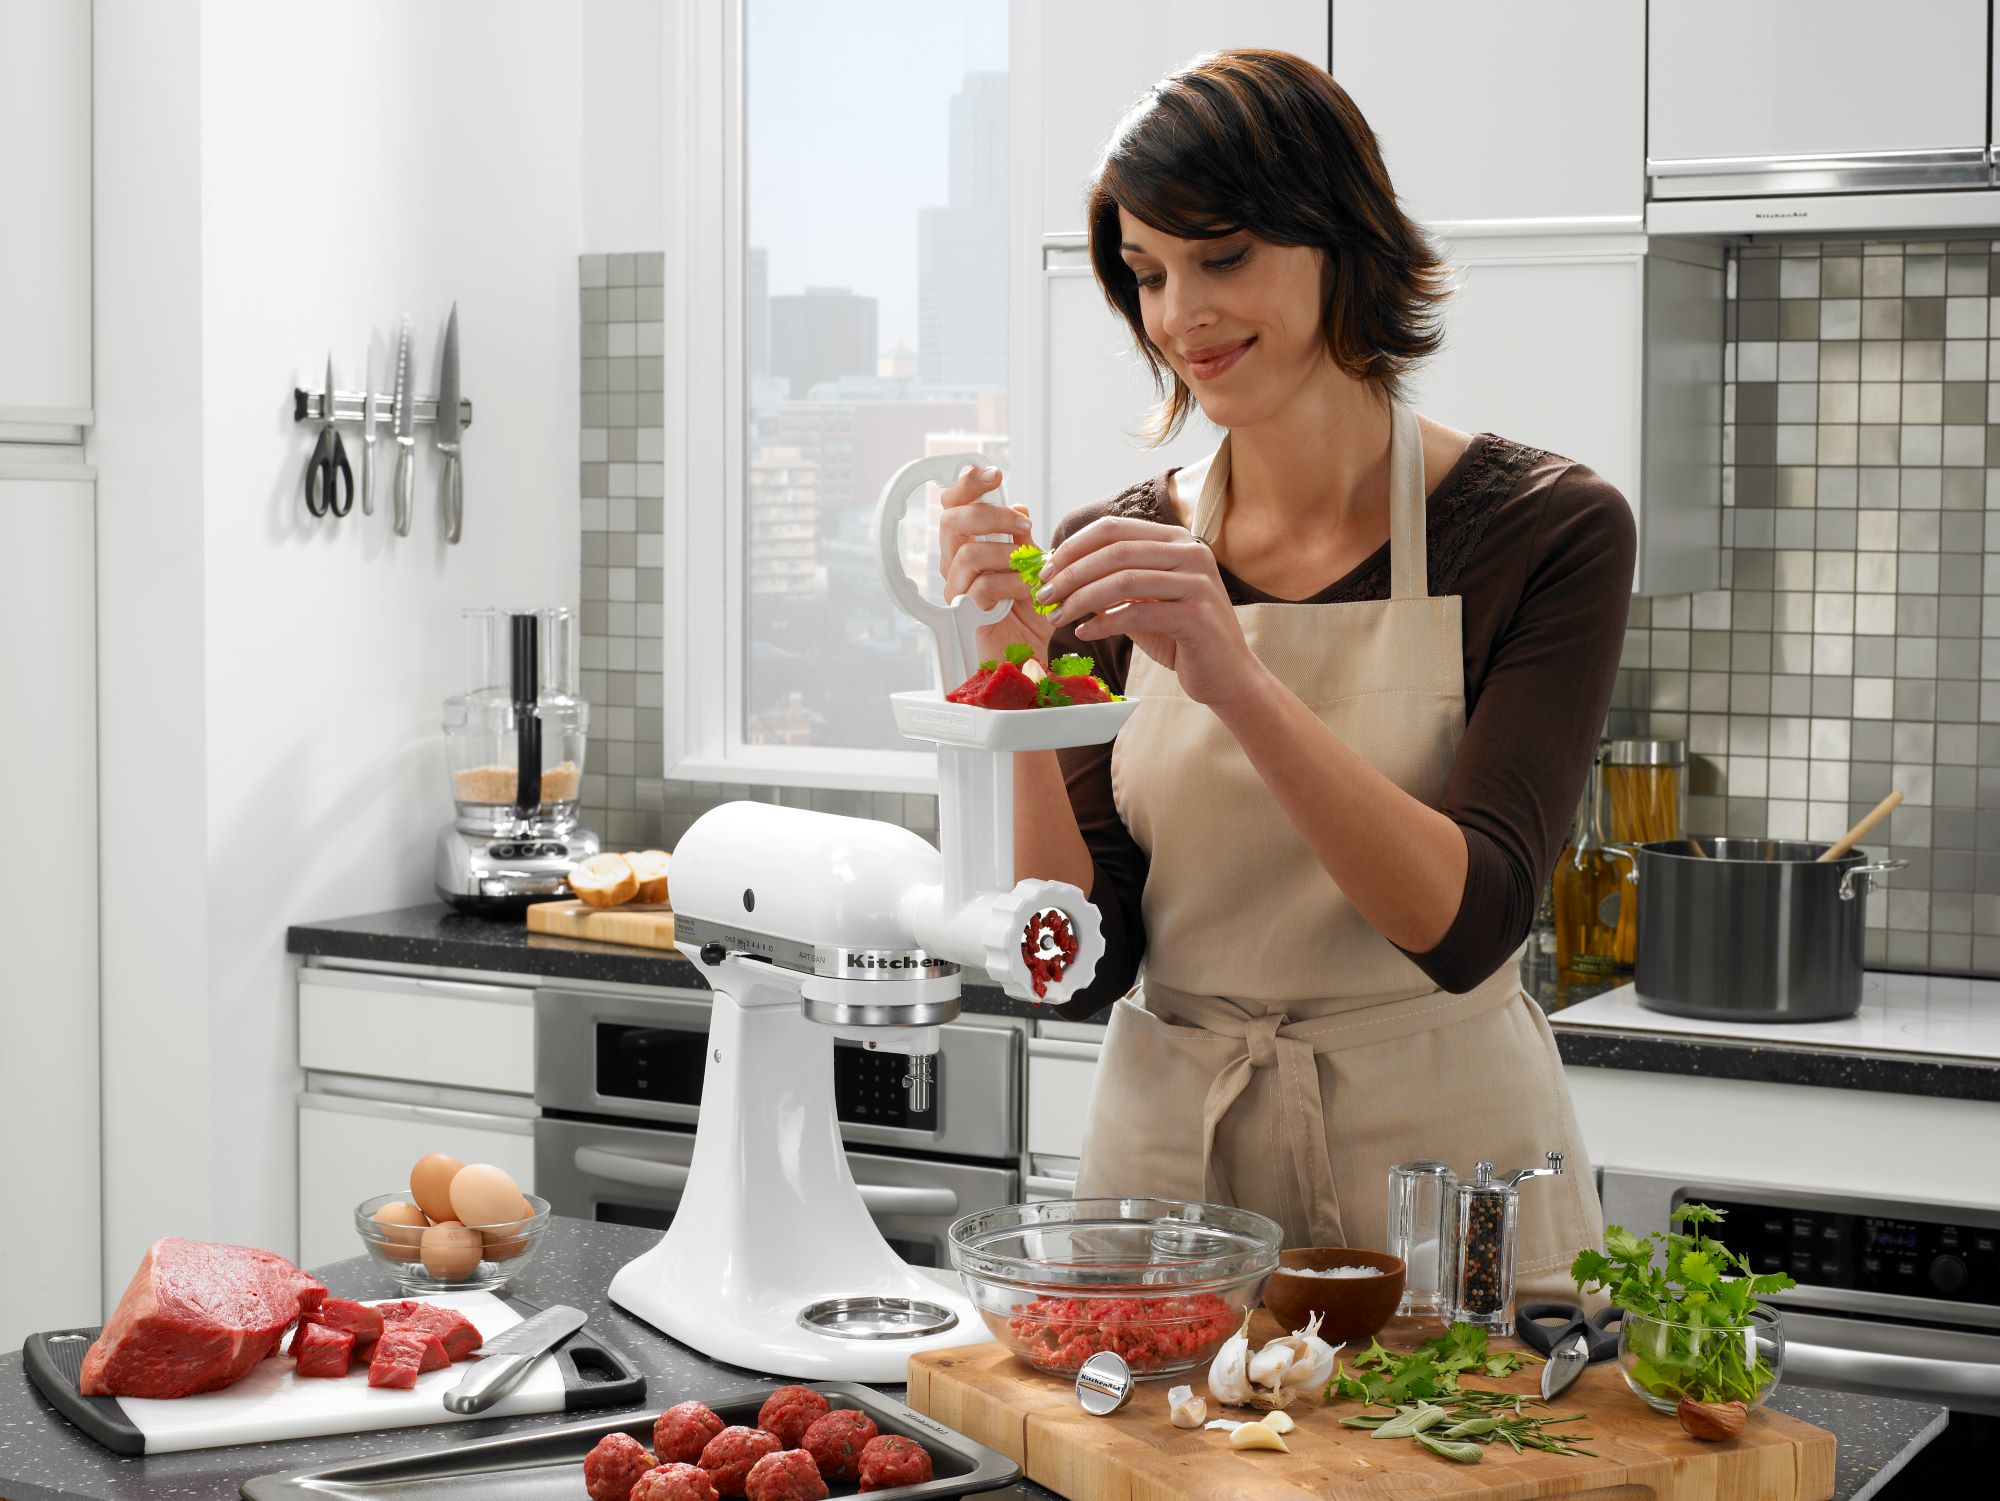 Kitchenaid Artisan 10-speed Stand Mixer - Hearth & Hand™ With